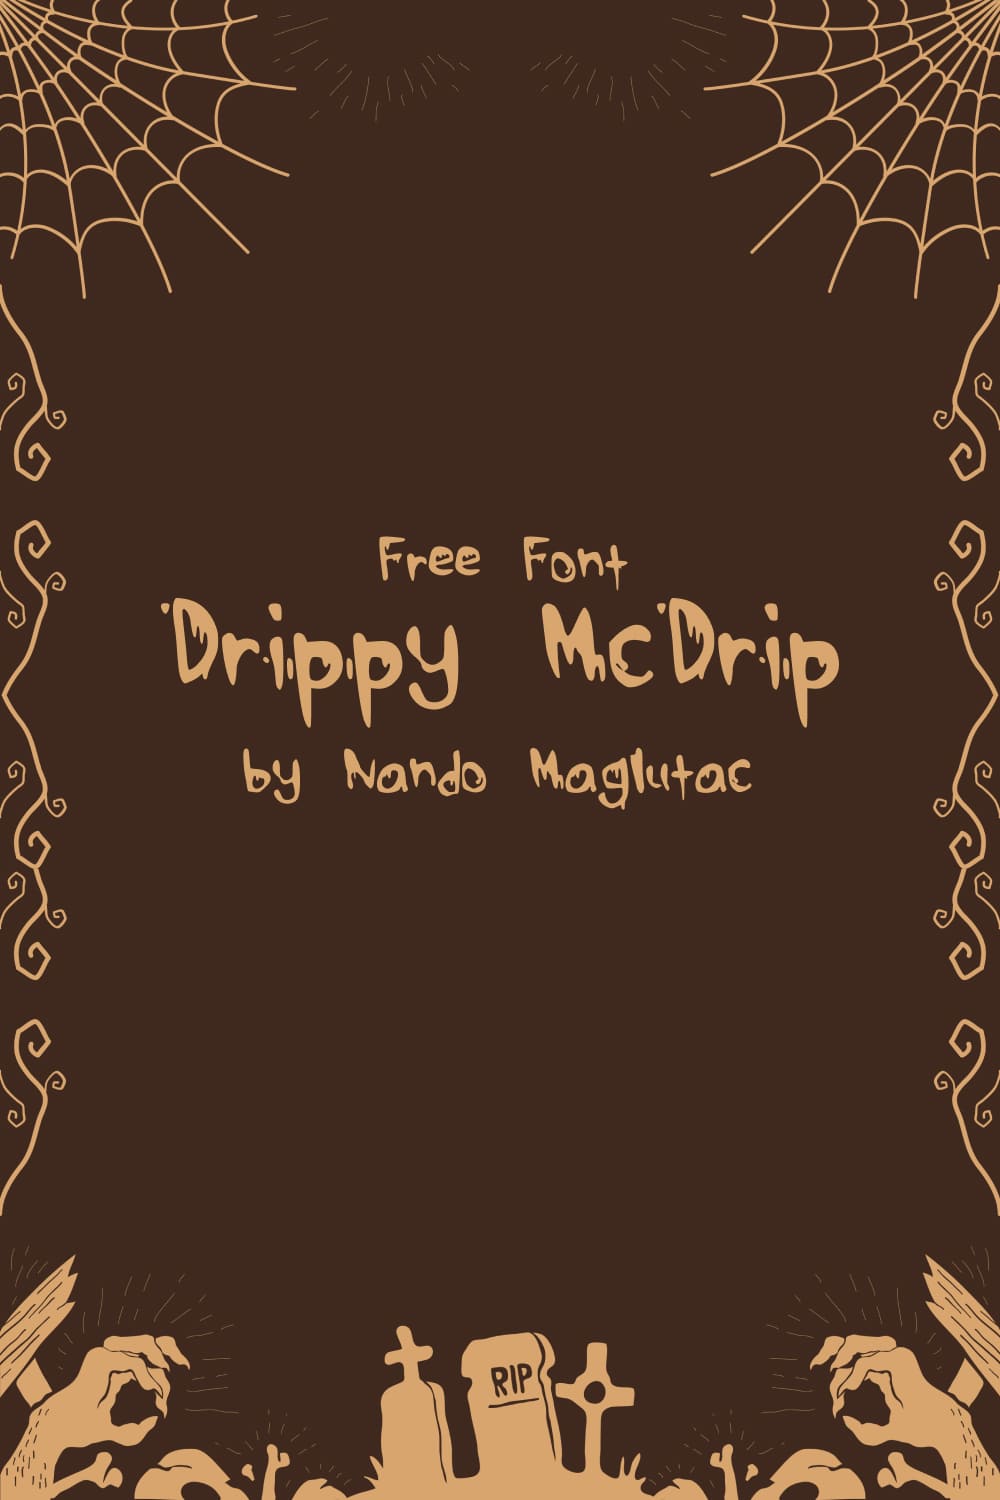 MasterBundles Free Drippy Font Halloween Pinterest Collage Image.